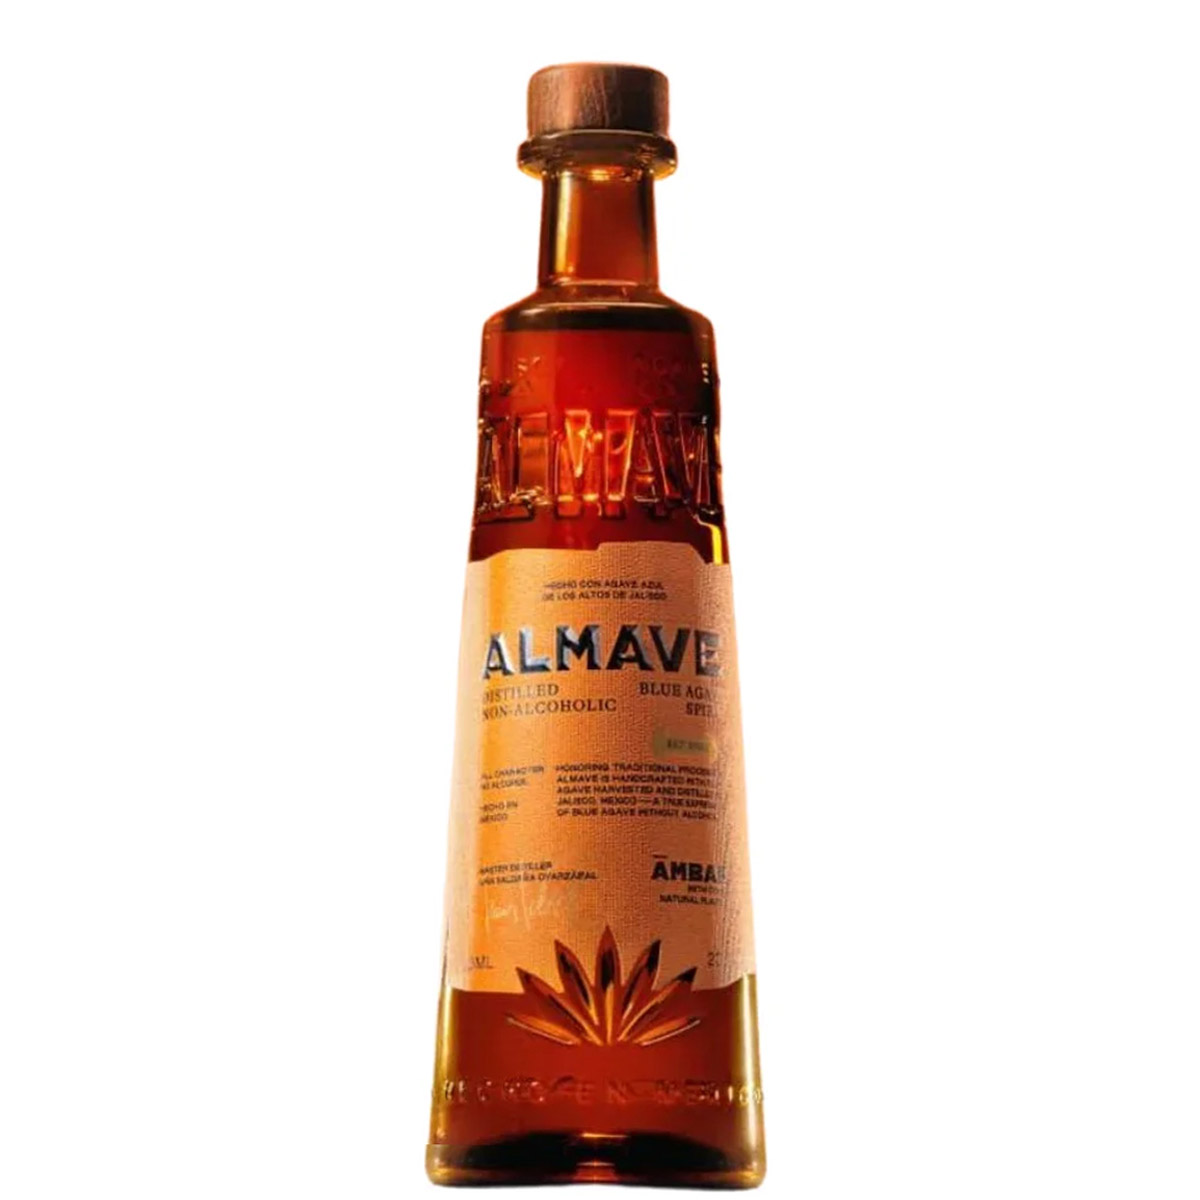 Almave Ambar 0% Alcohol Free Agave Spirit